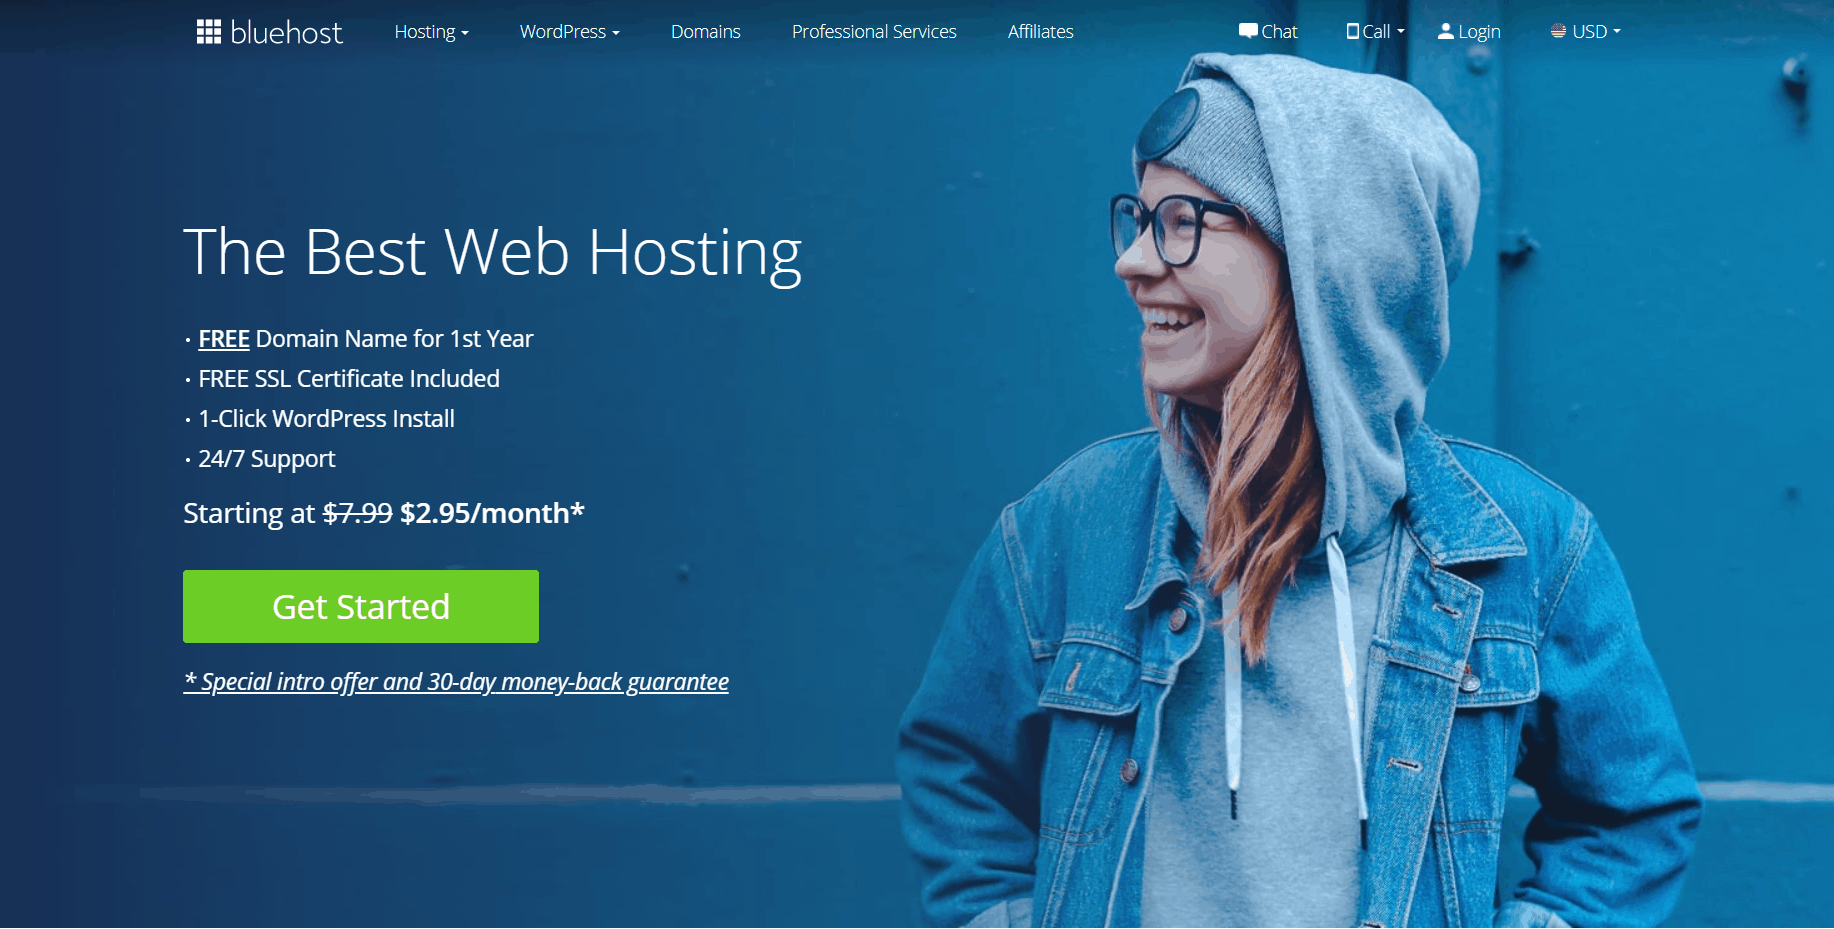 bluehost hosting